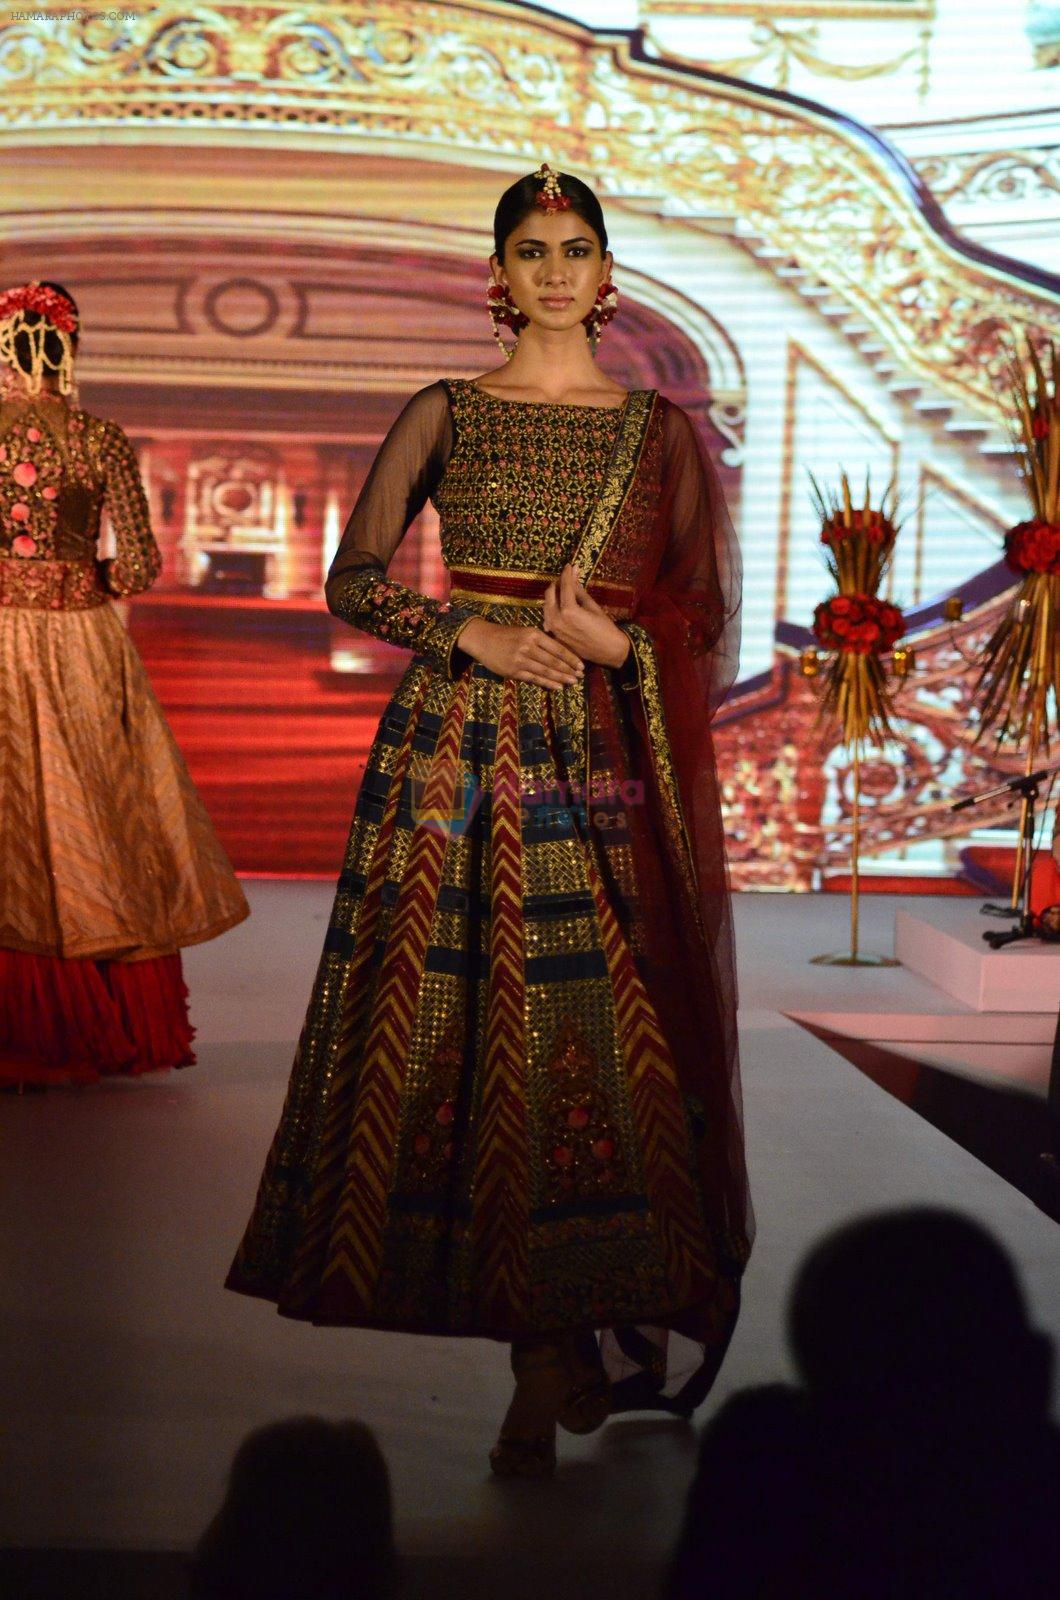 at Royal Fable show in Taj Hotel, Mumbai on 6th Nov 2014